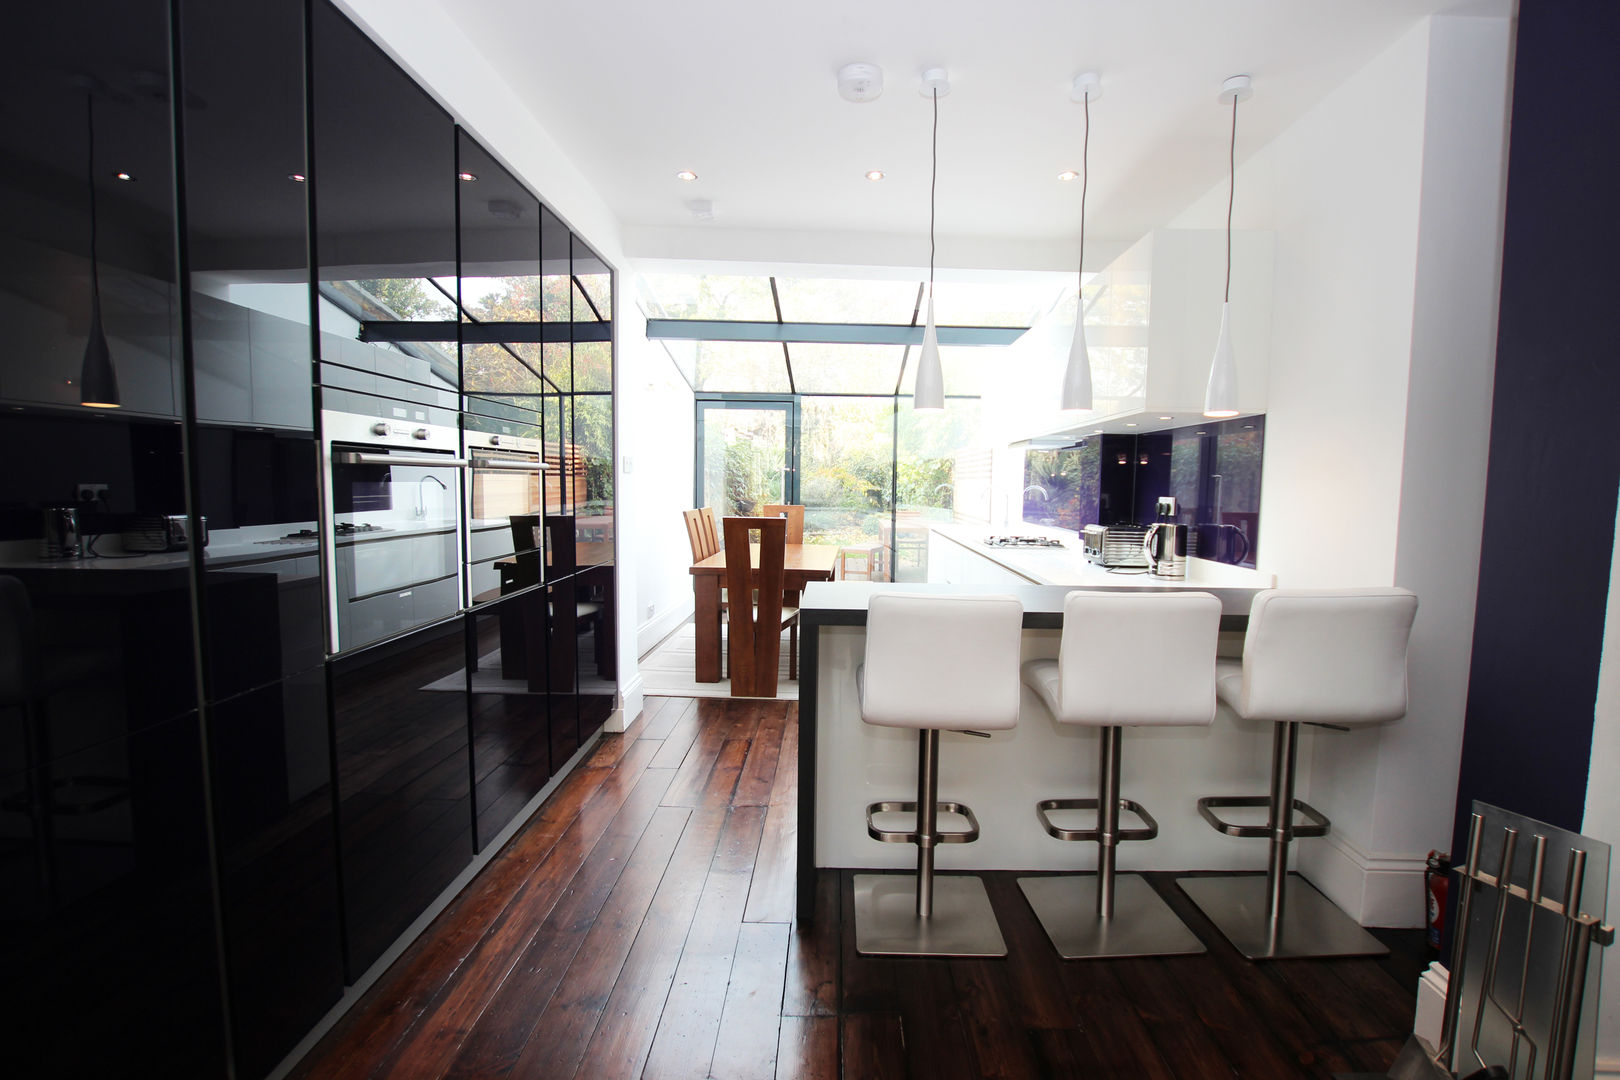 Purple gloss glass with white gloss lacquer kitchen units​ LWK London Kitchens Cocinas modernas